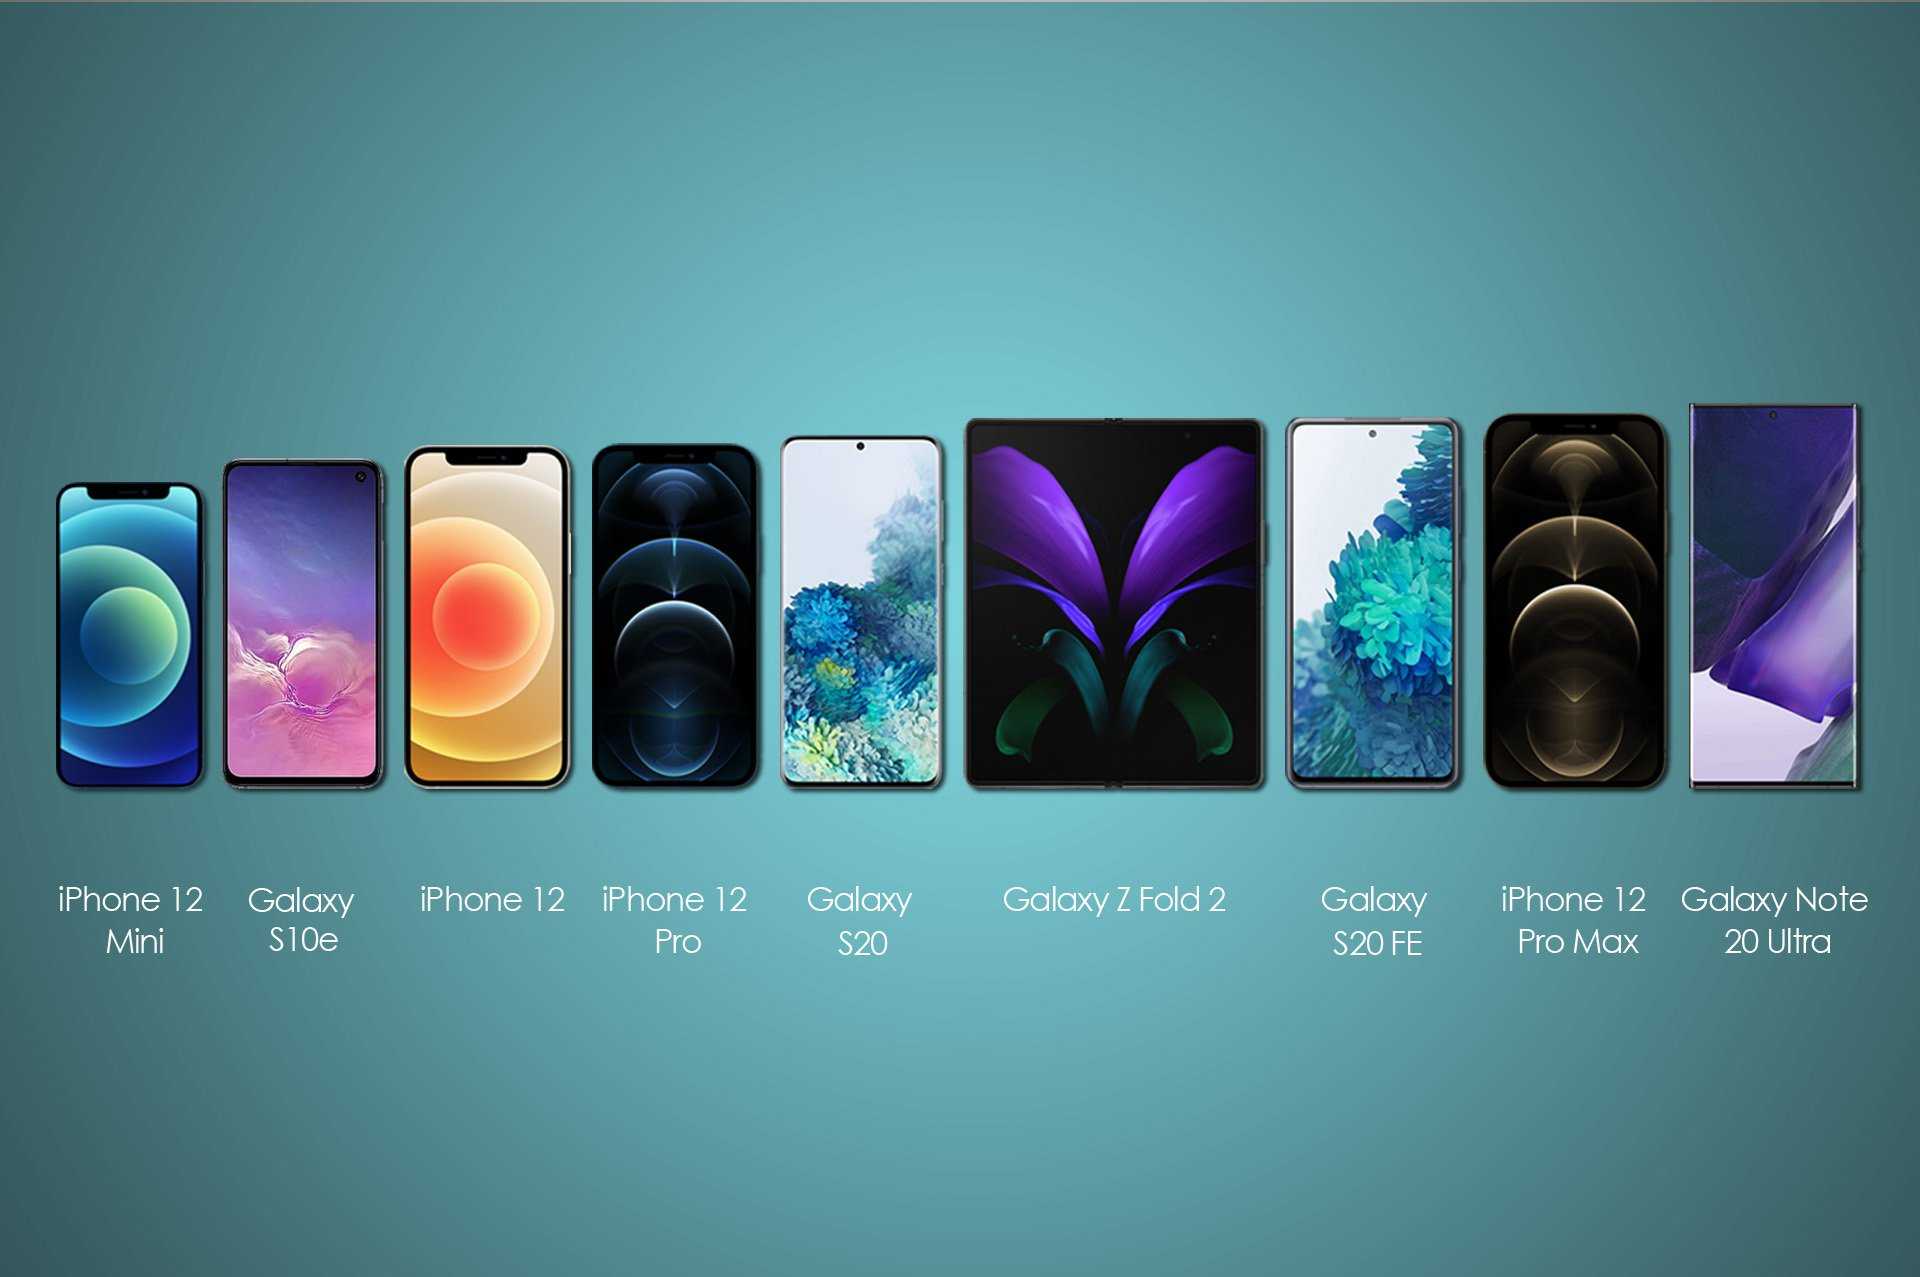 Iphone samsung galaxy 12. Samsung s10 Mini. Samsung Galaxy s10e vs iphone 12 Mini. Samsung s+10 Mini Galaxy s. Samsung s10 vs s10e.